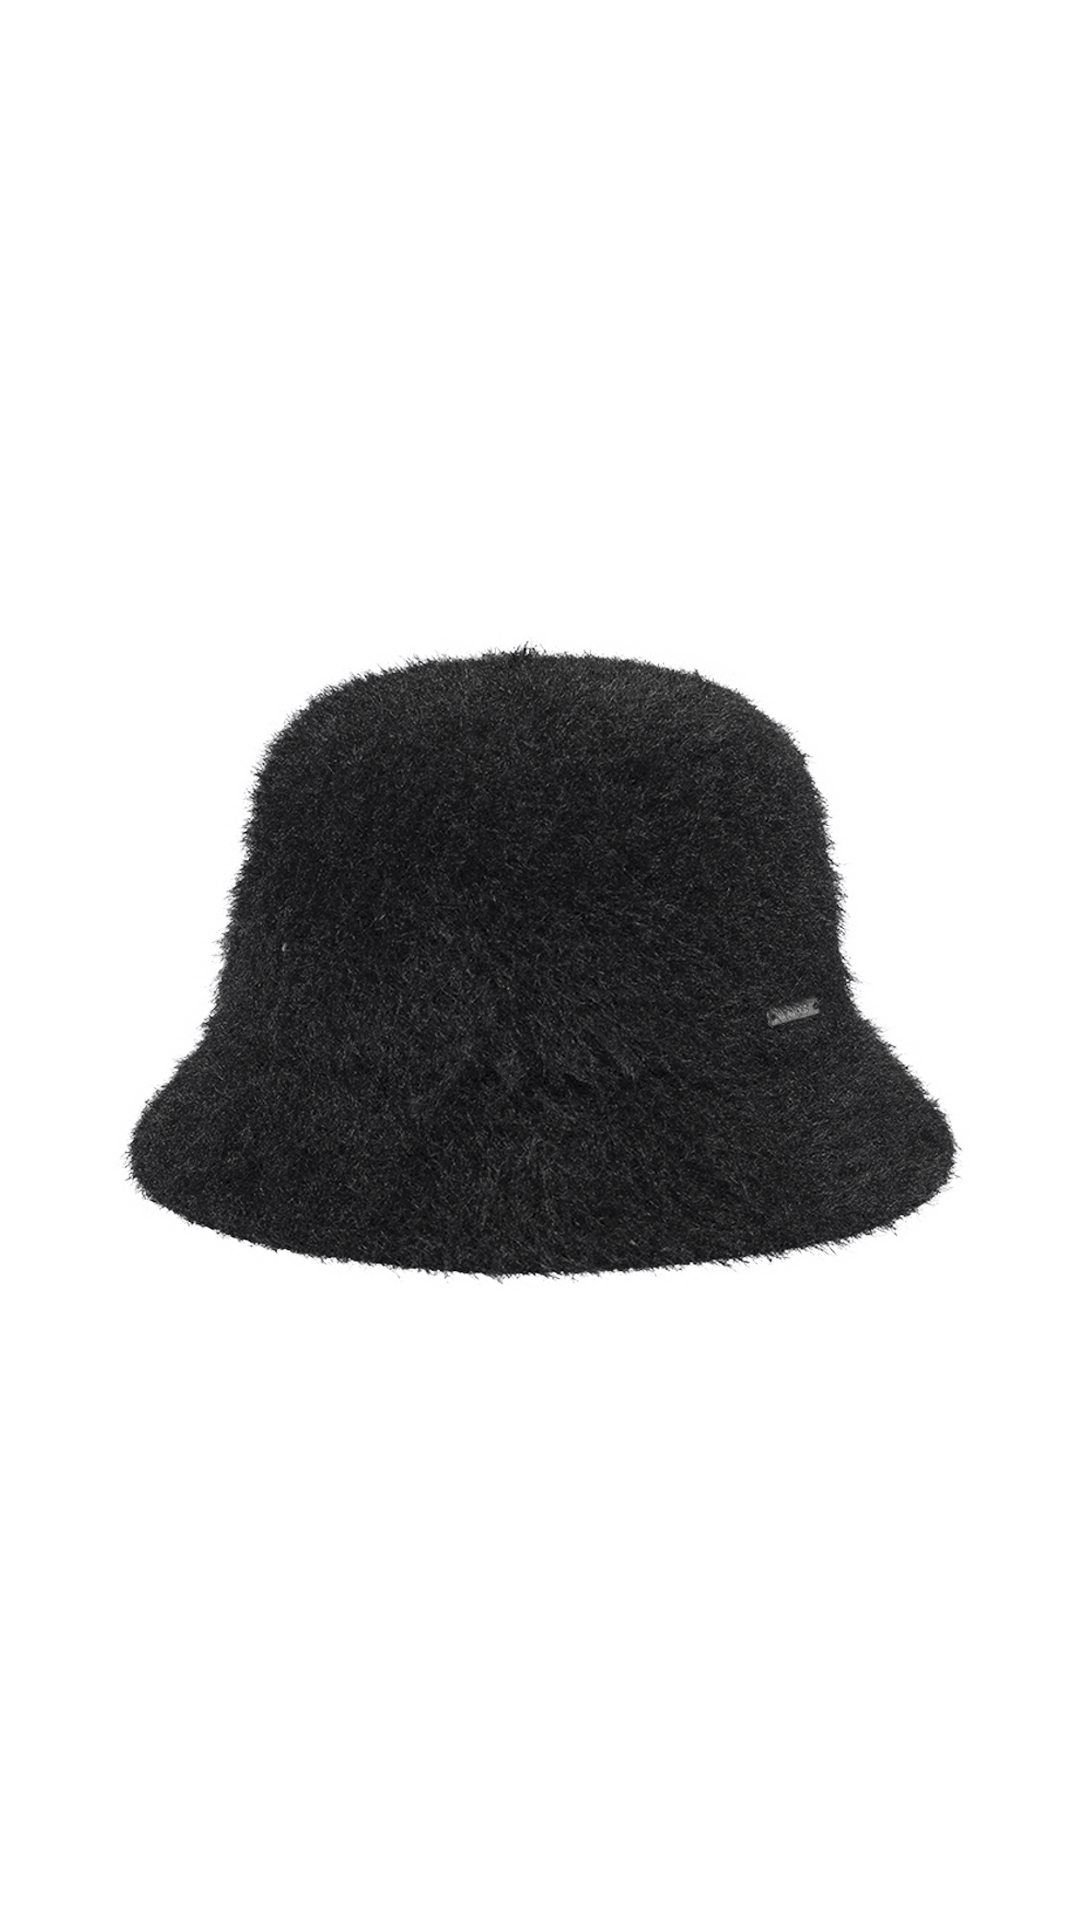 Lavatera Hat